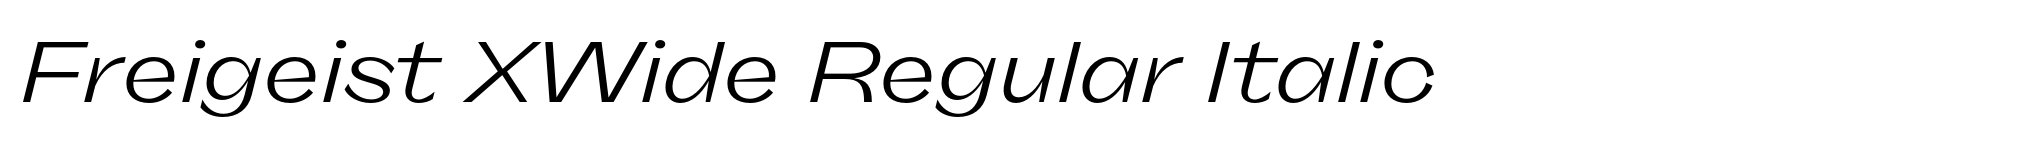 Freigeist XWide Regular Italic image